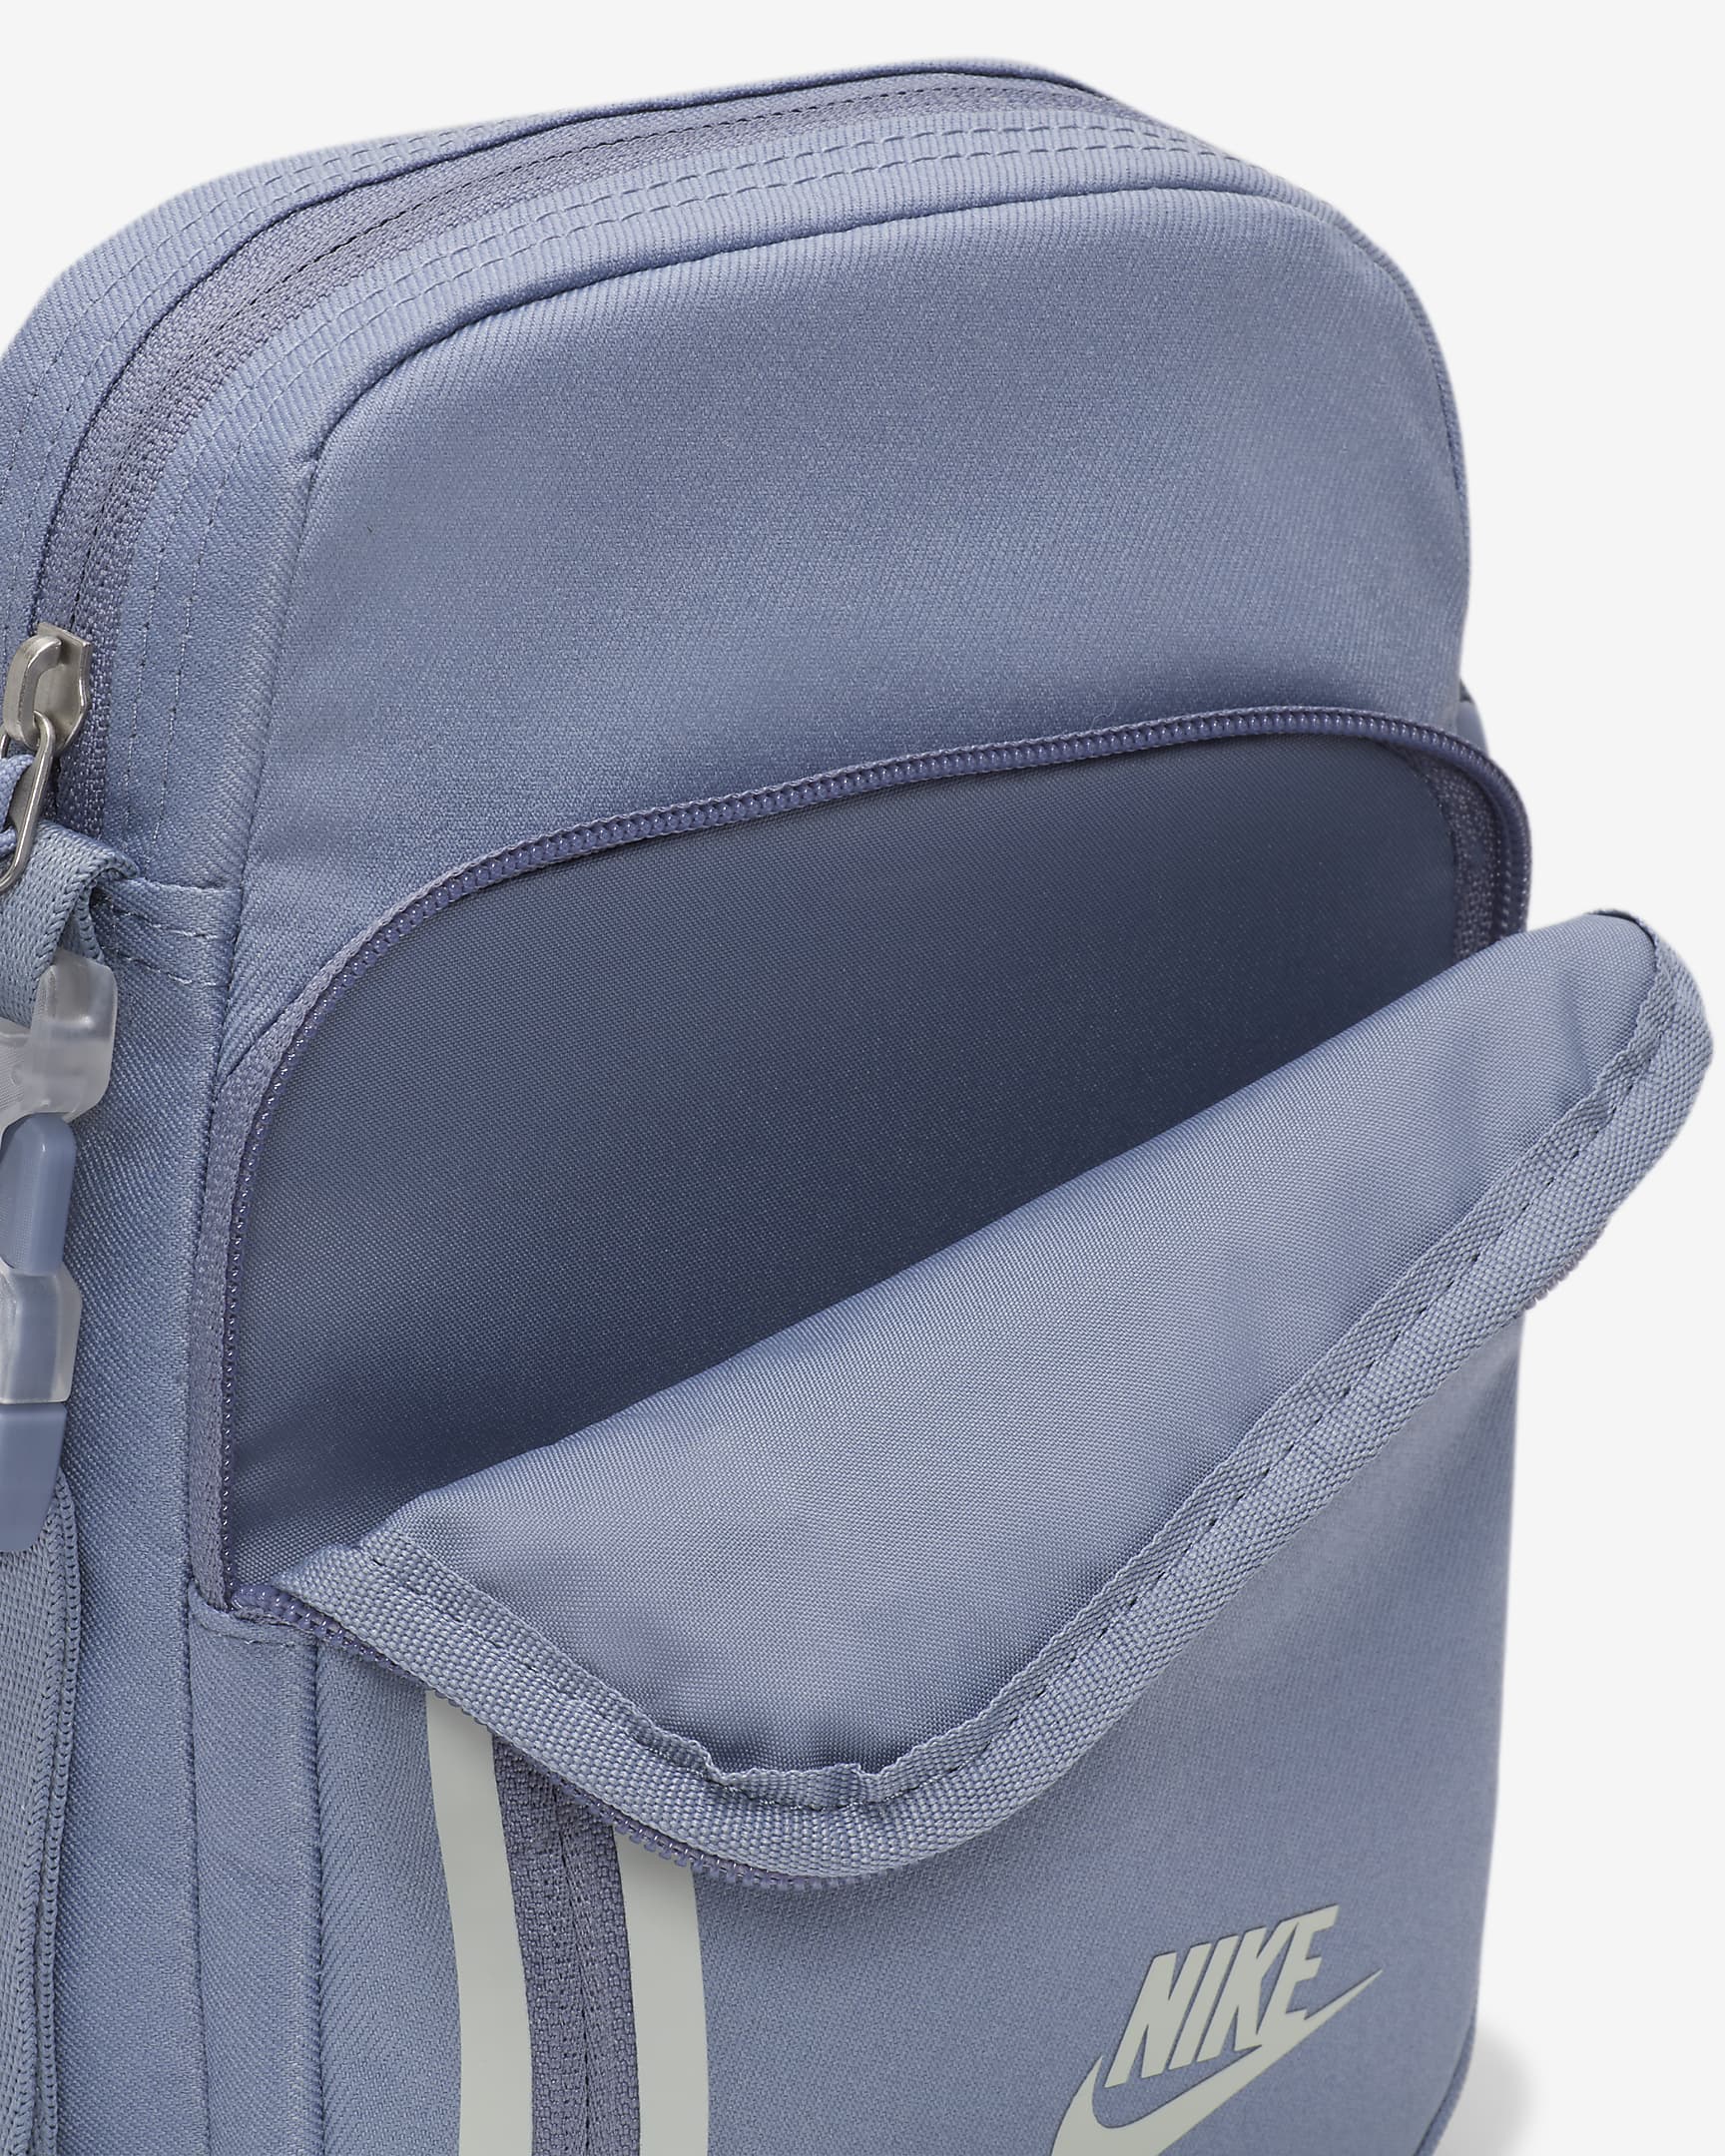 Nike Premium Cross-Body Bag (4L) - Ashen Slate/Ashen Slate/Light Silver